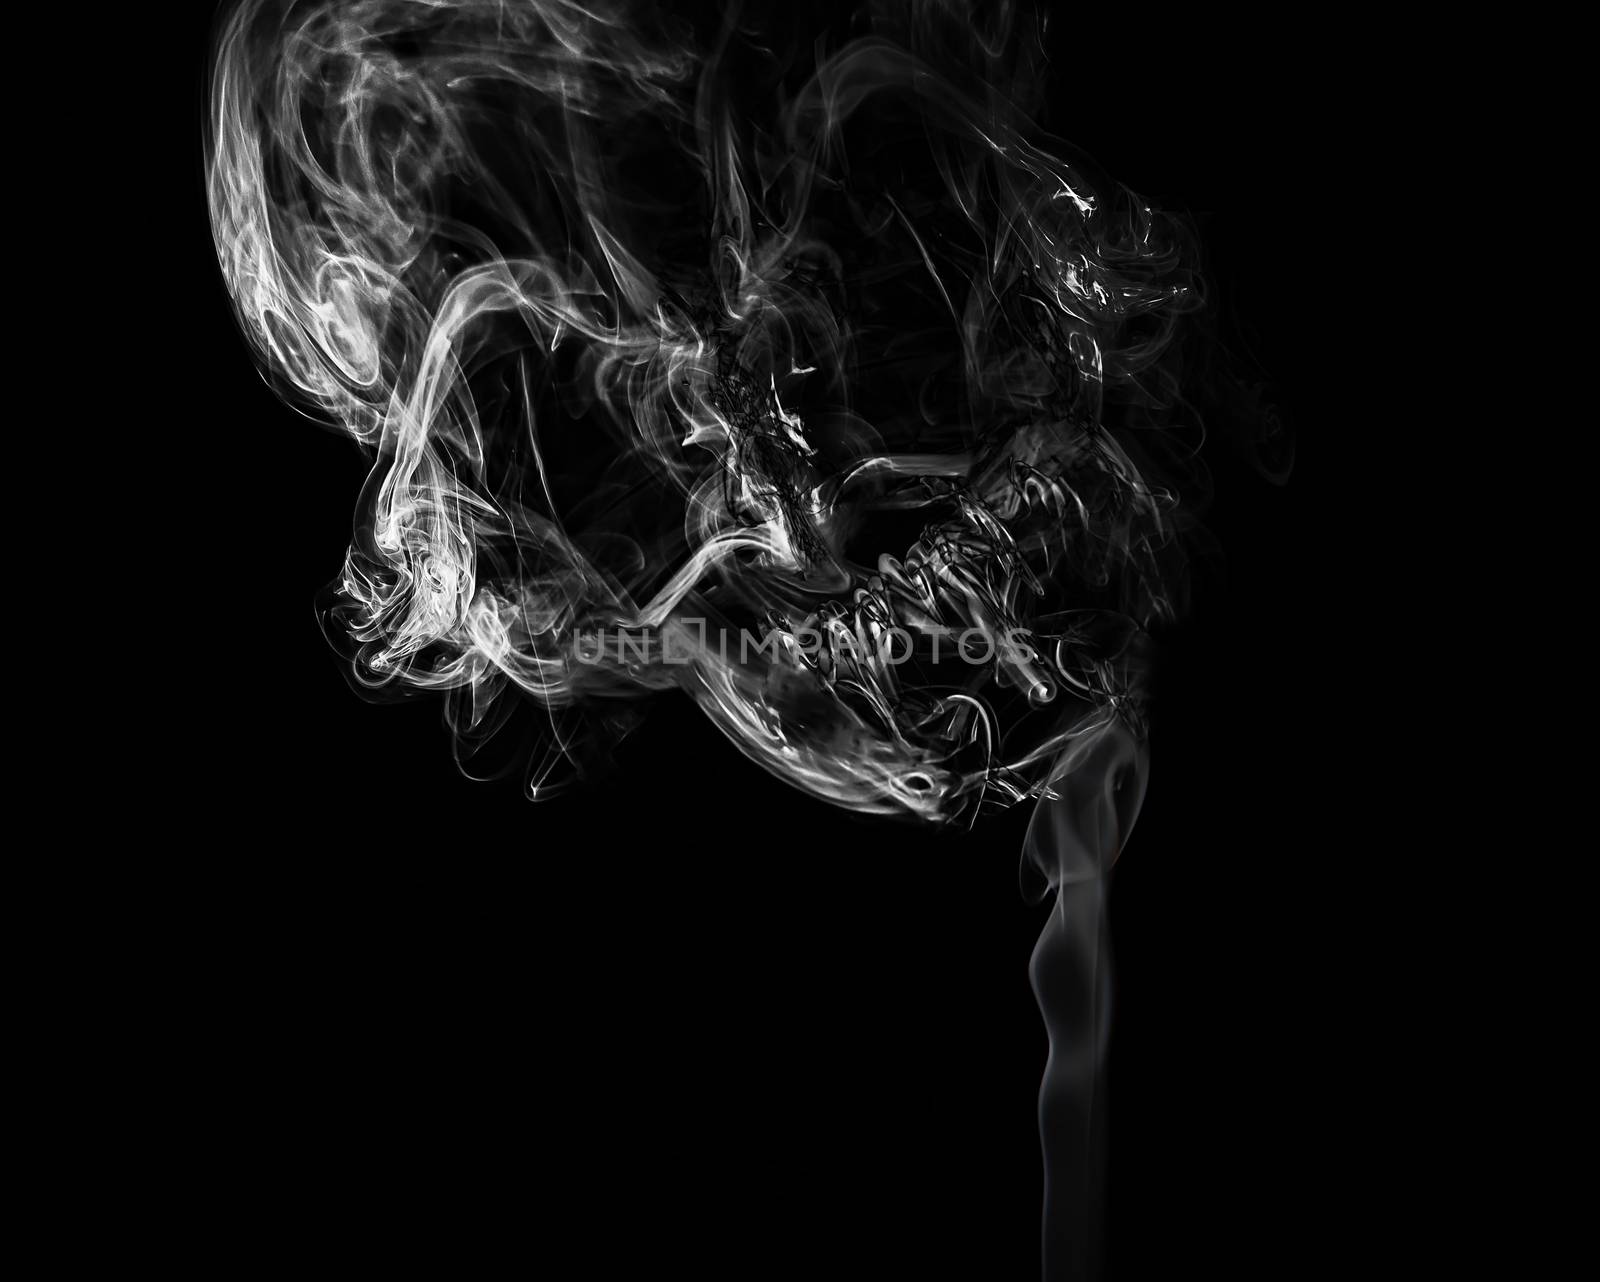 Cigarette smoke forming a skull shape by Cipariss